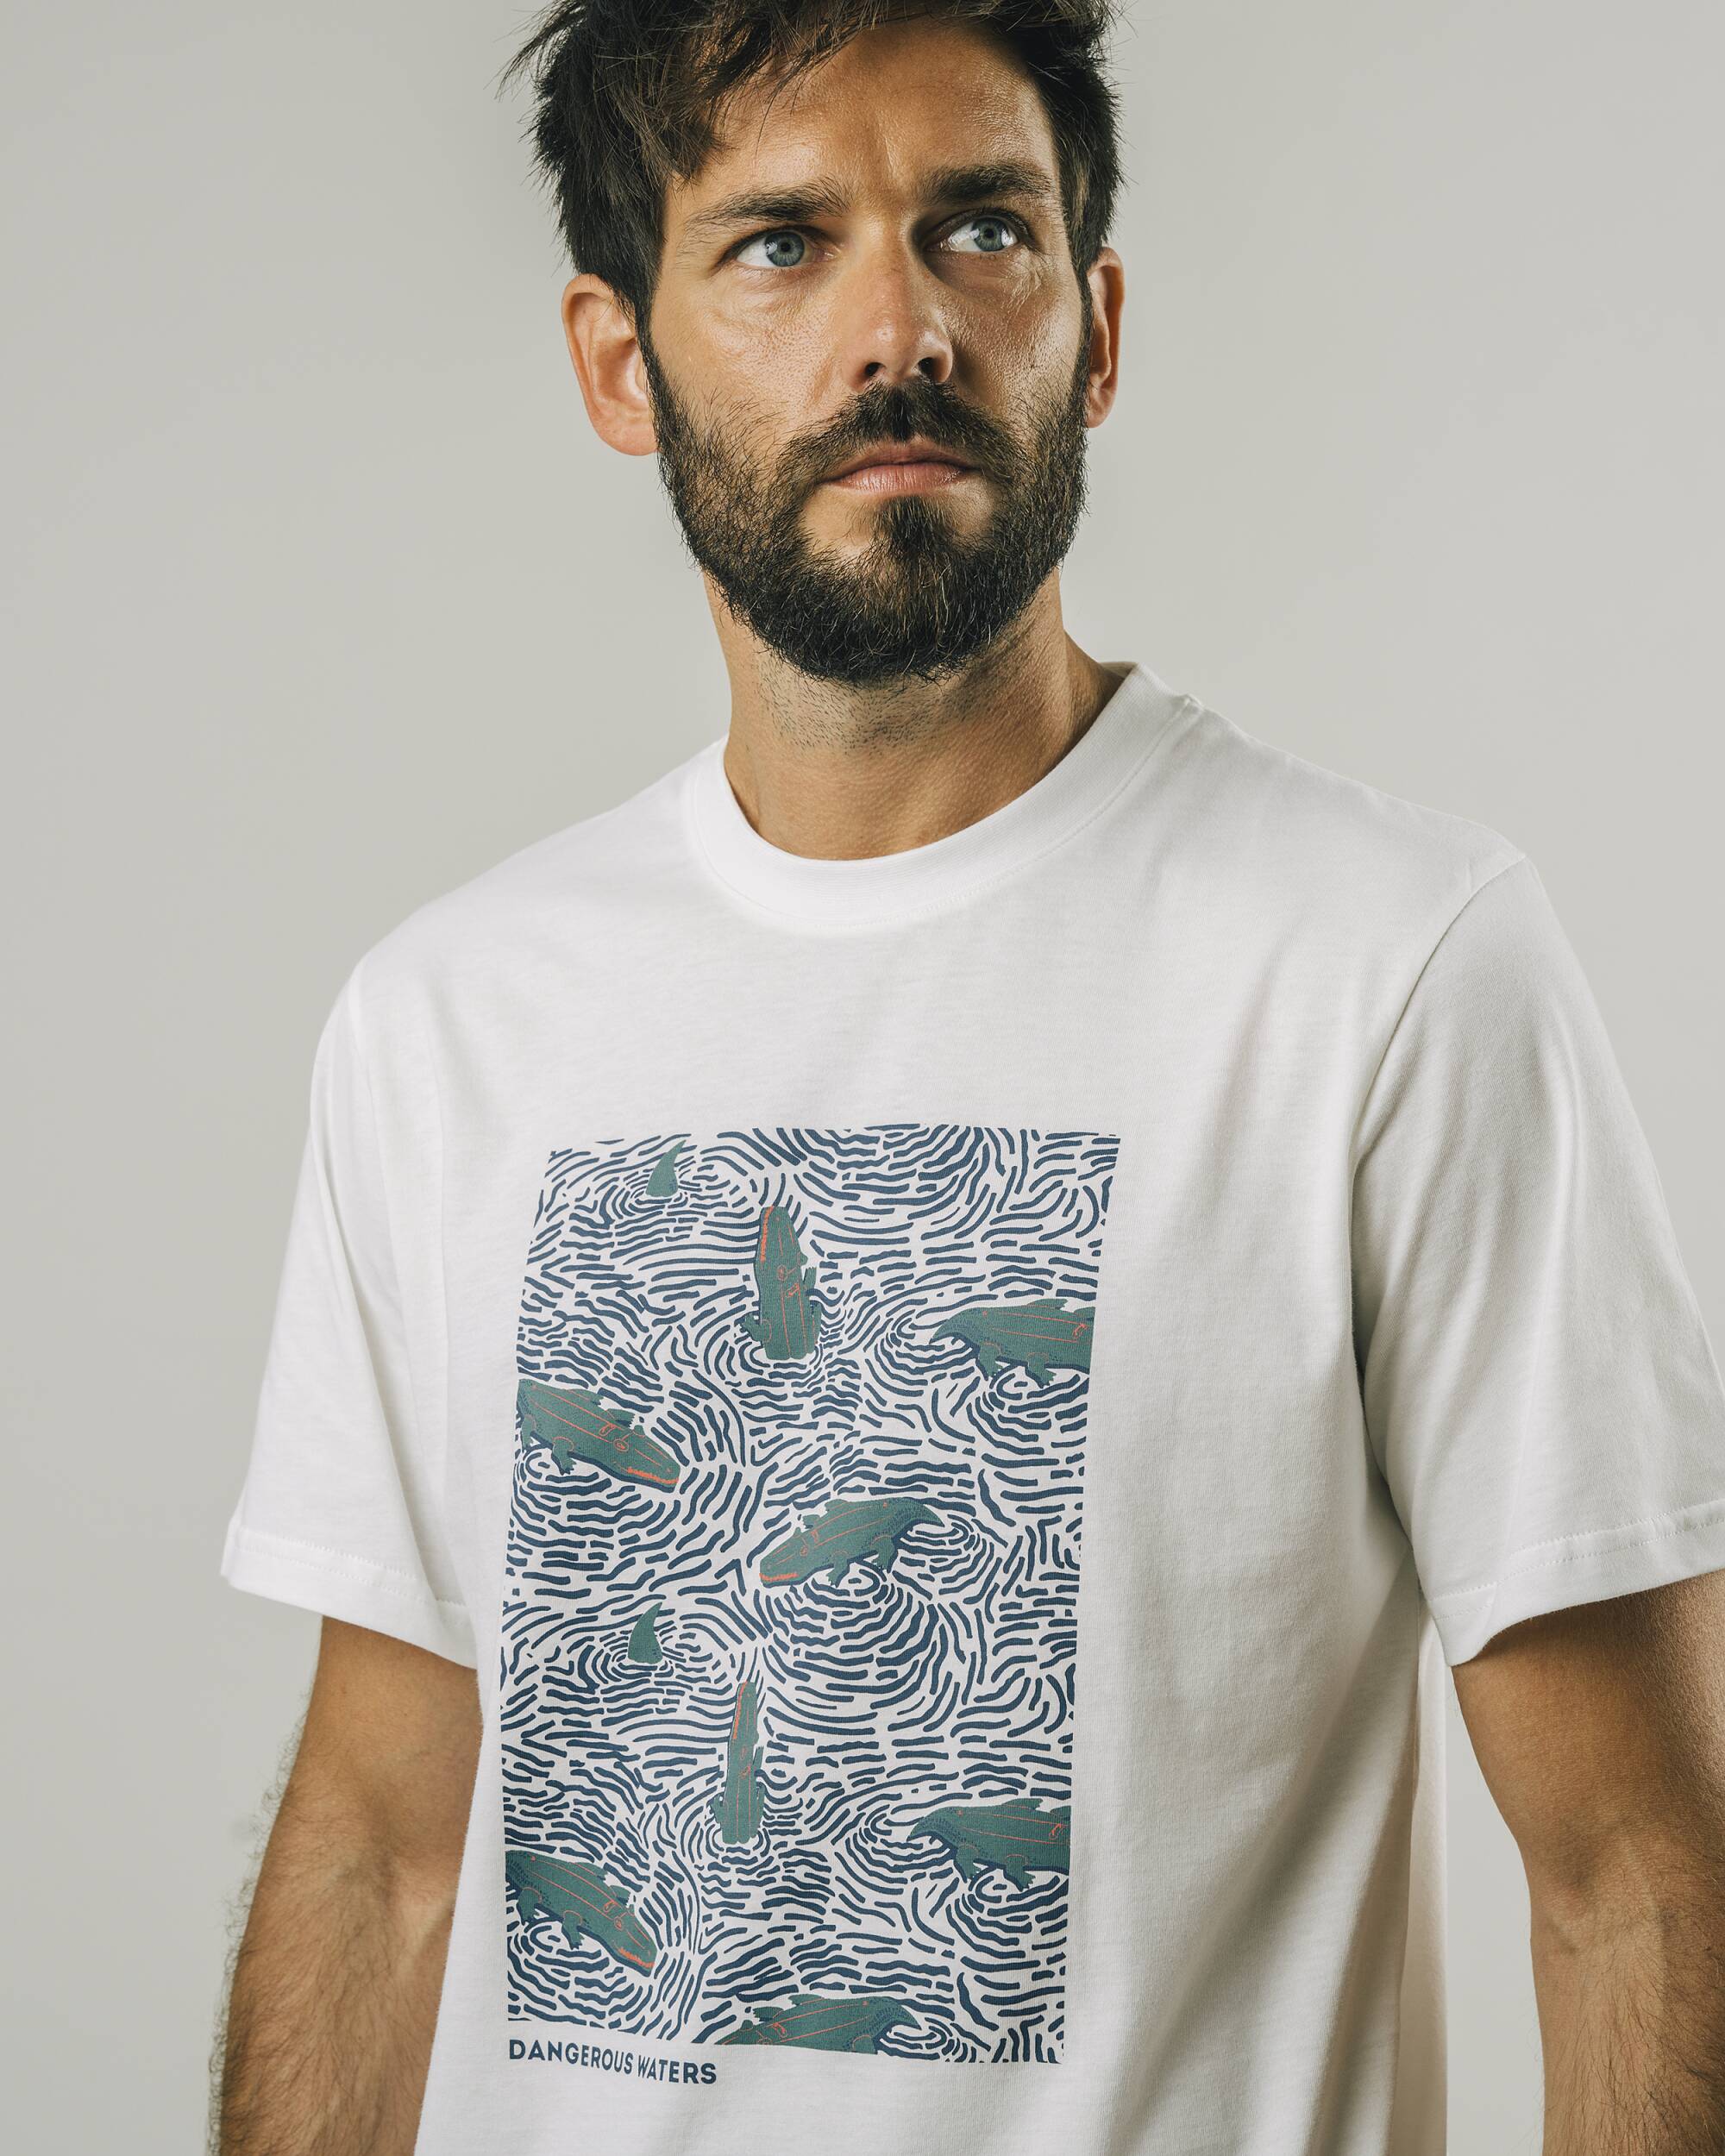 White, printed Crocodile T-shirt made from 100% organic cotton from Brava Fabrics